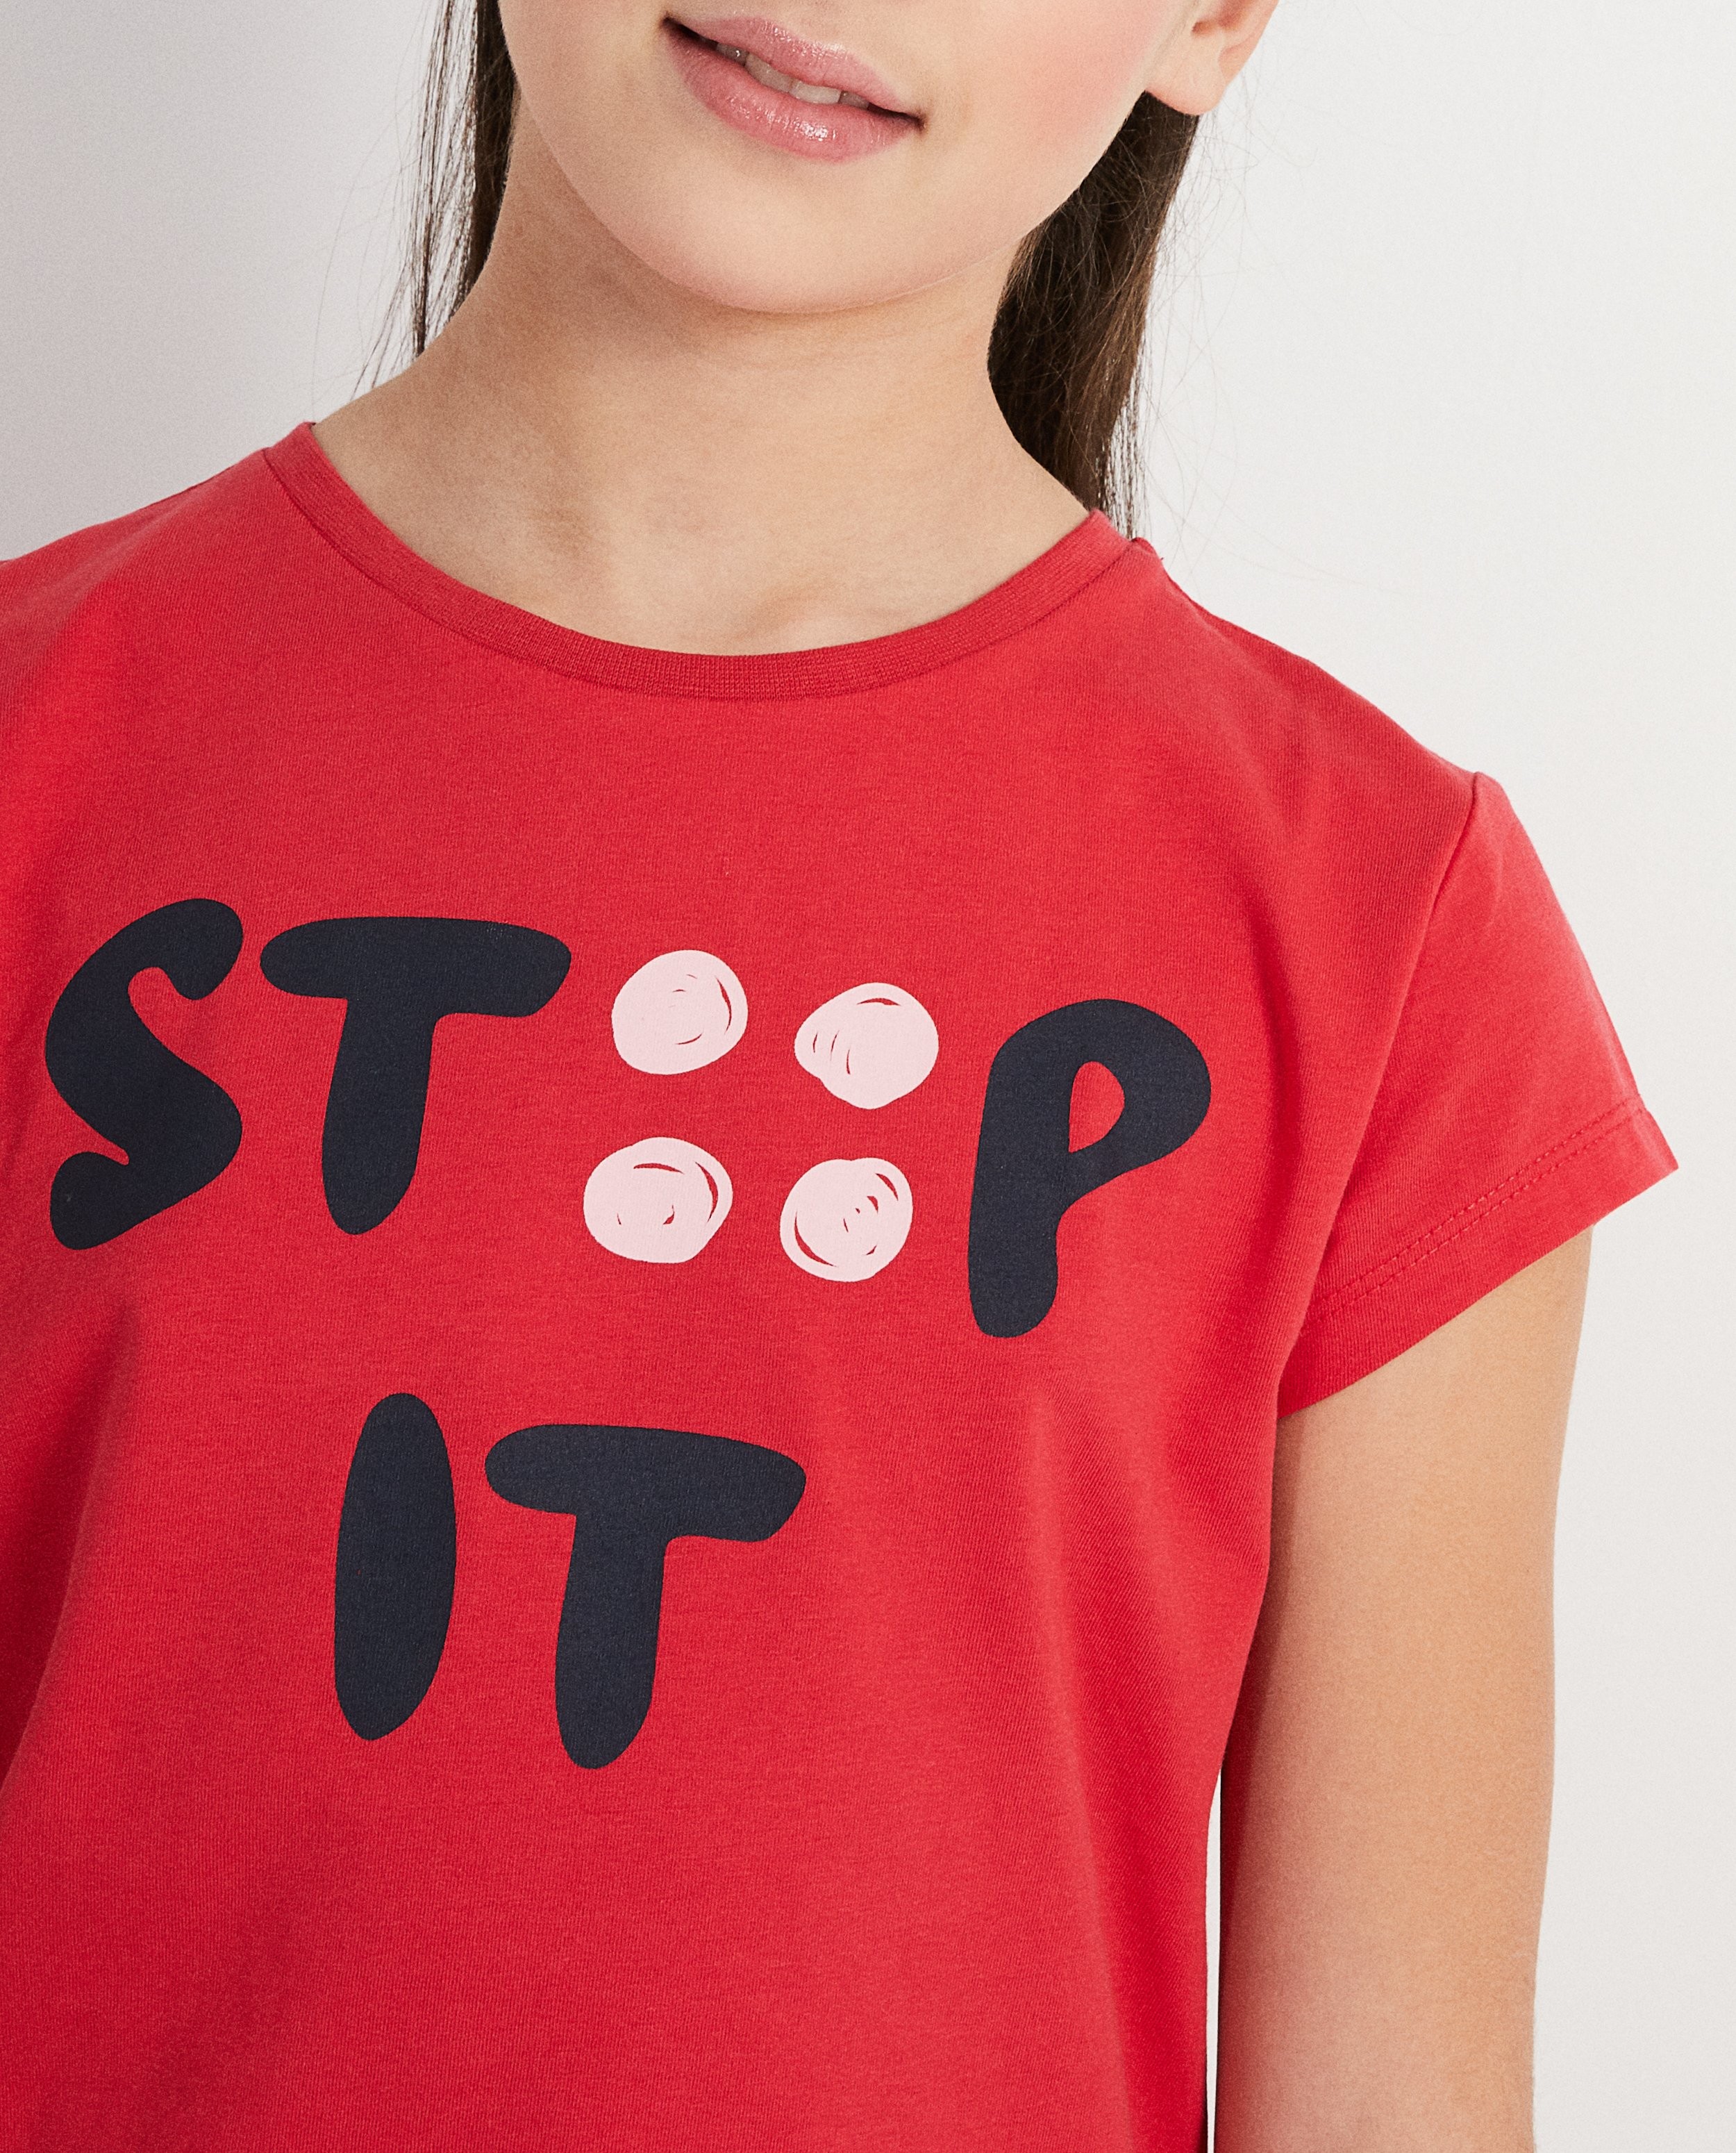 T-shirts - Stip it T-shirt Ketnet